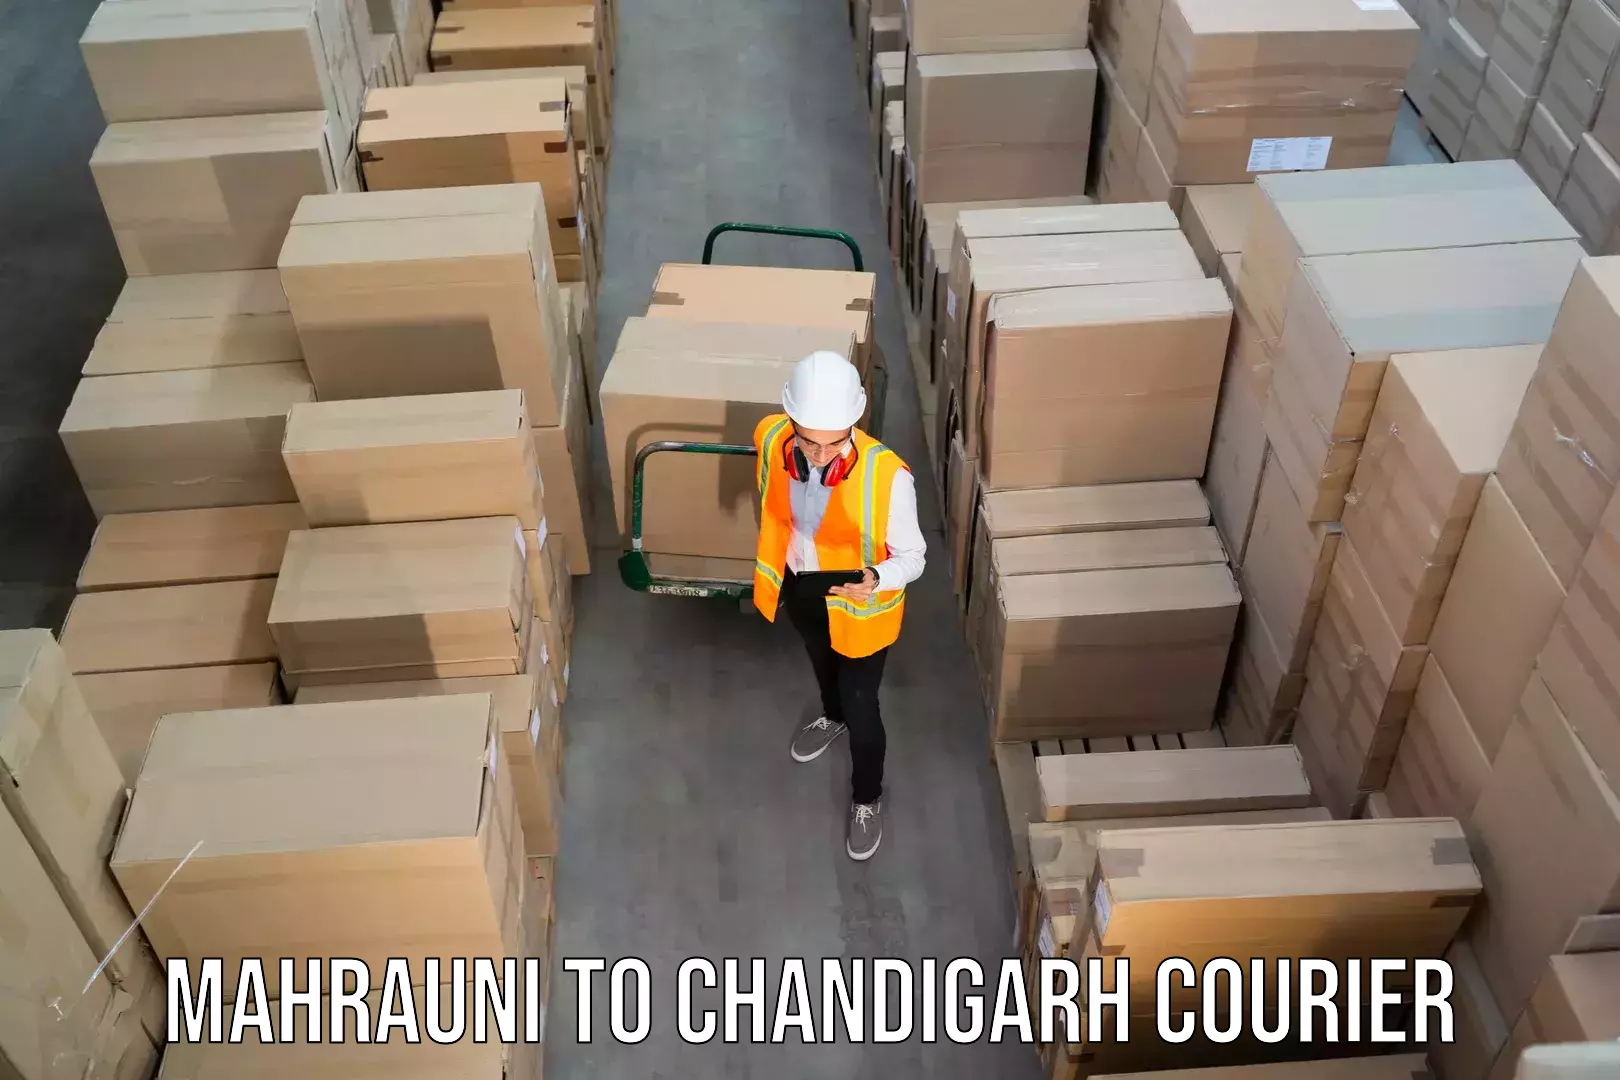 Courier service comparison Mahrauni to Chandigarh